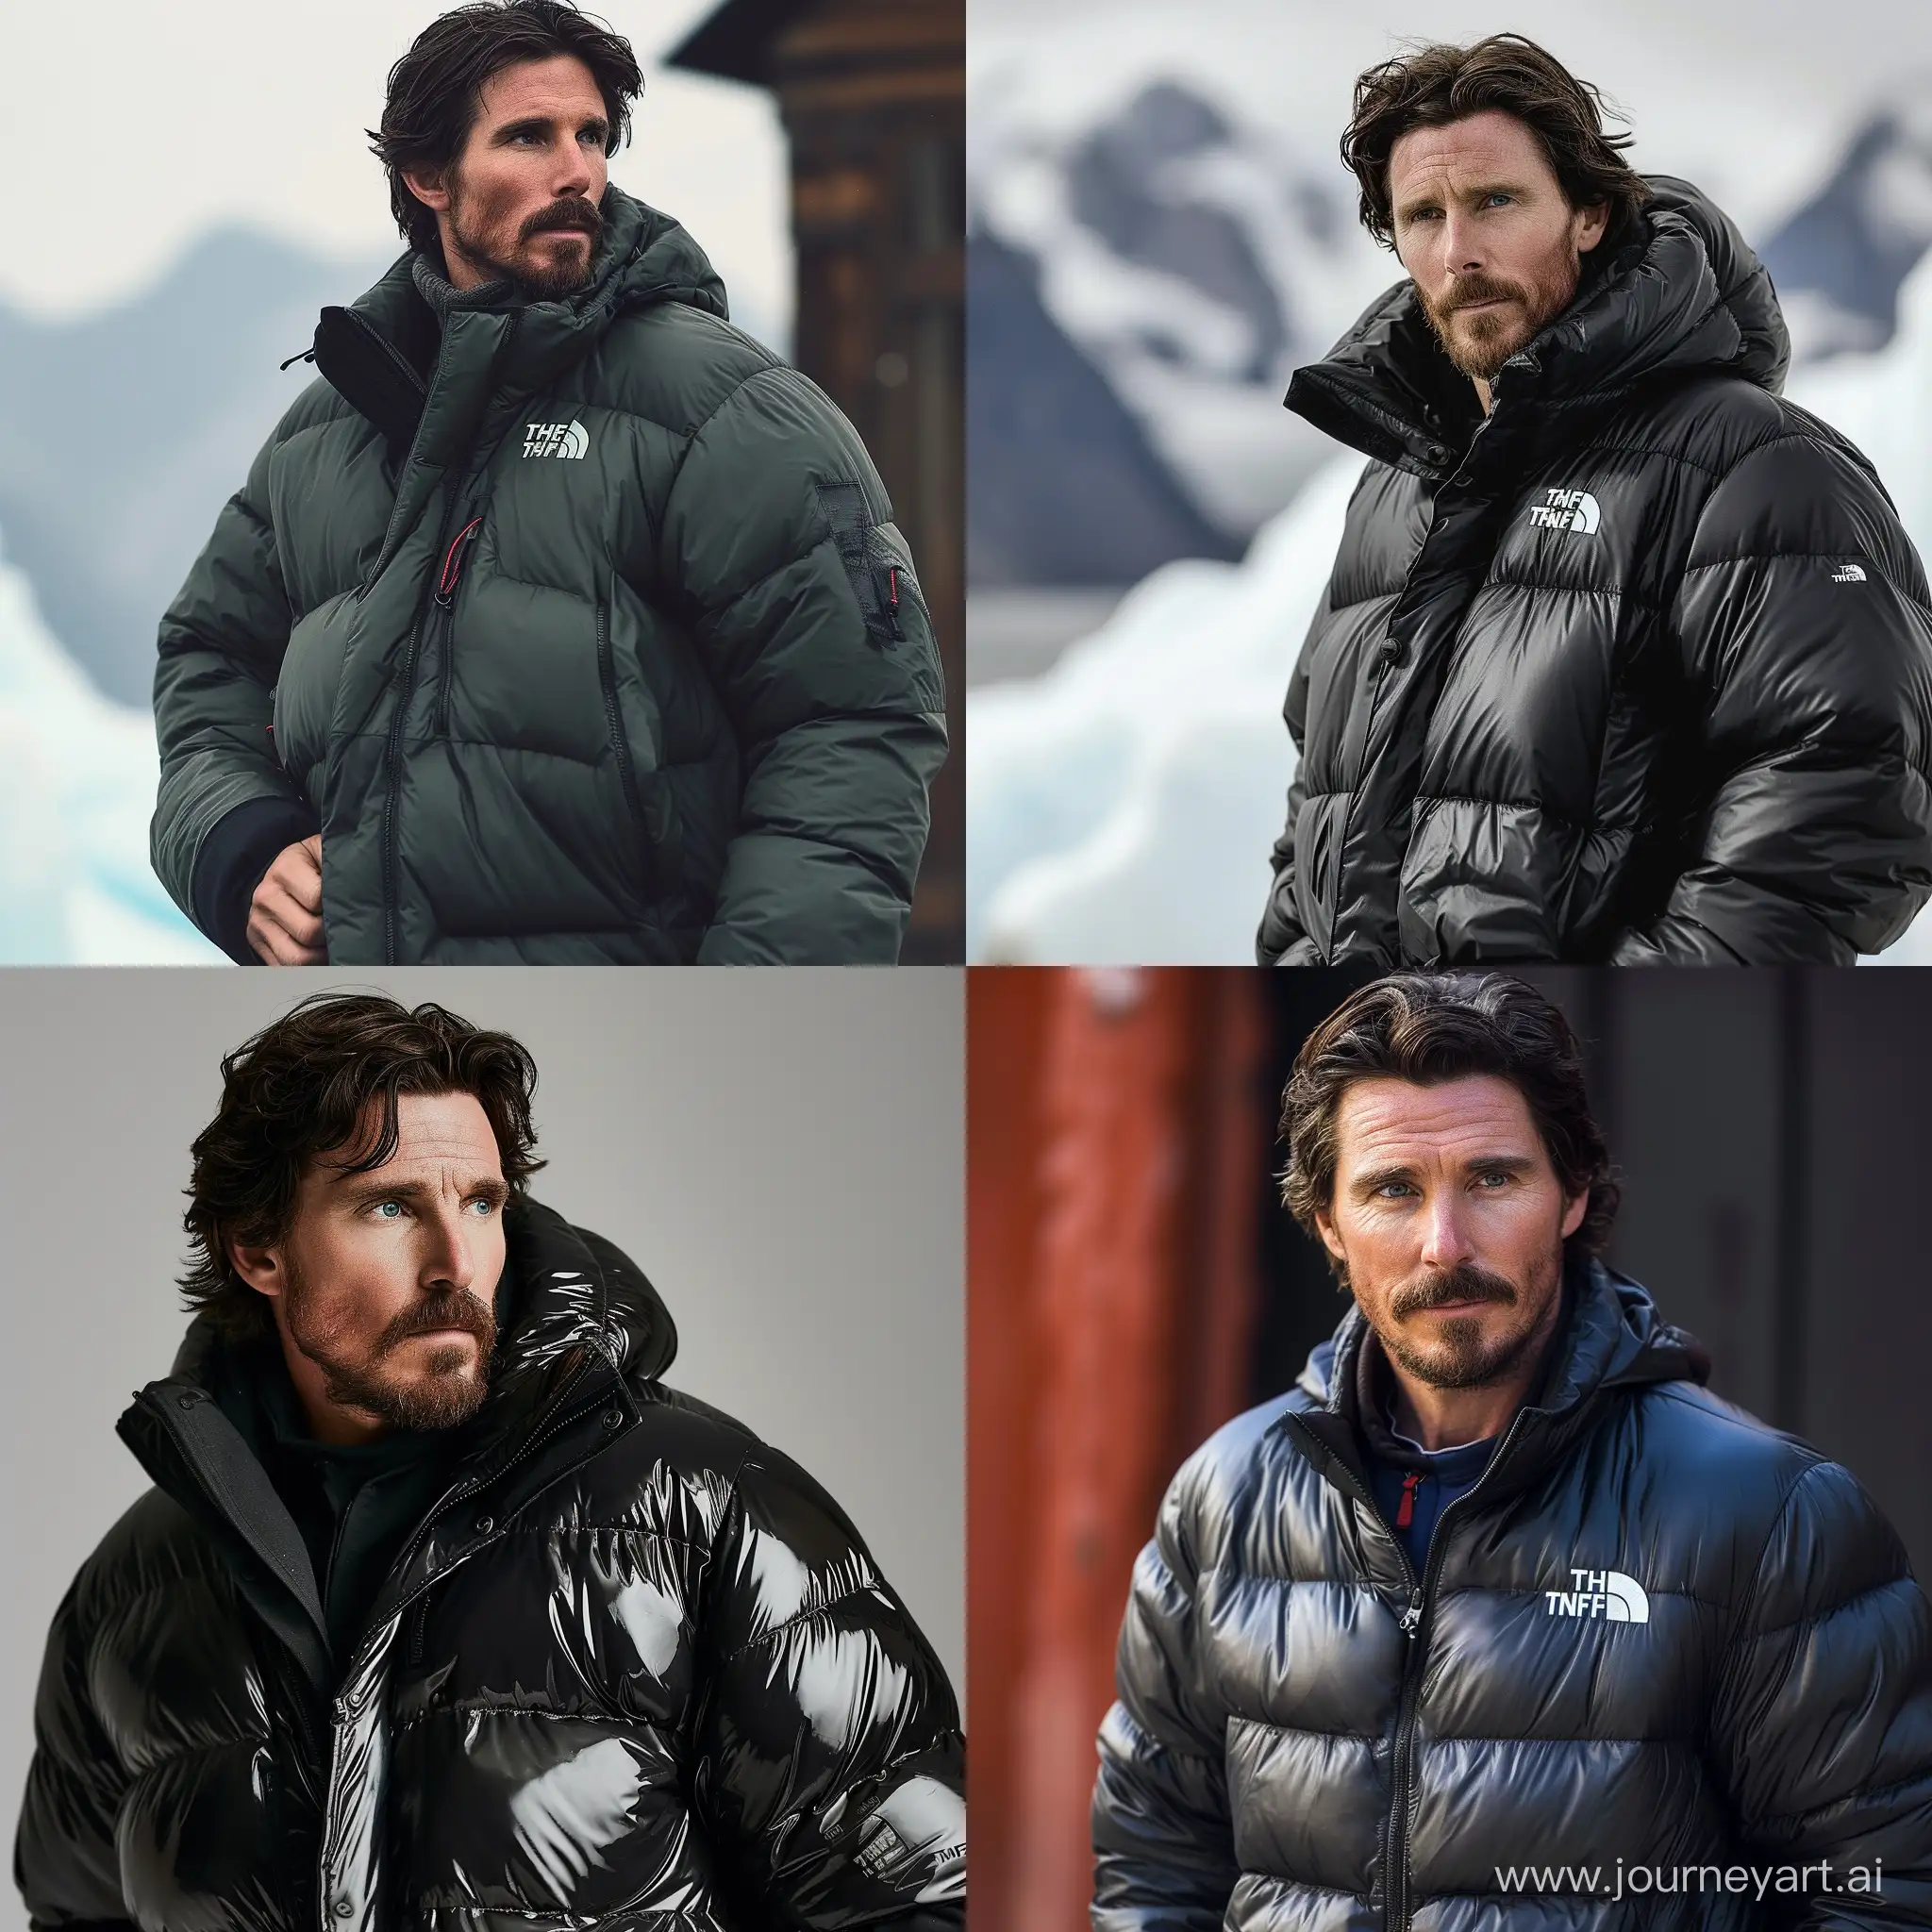 Christian Bale in a TNF down jacket